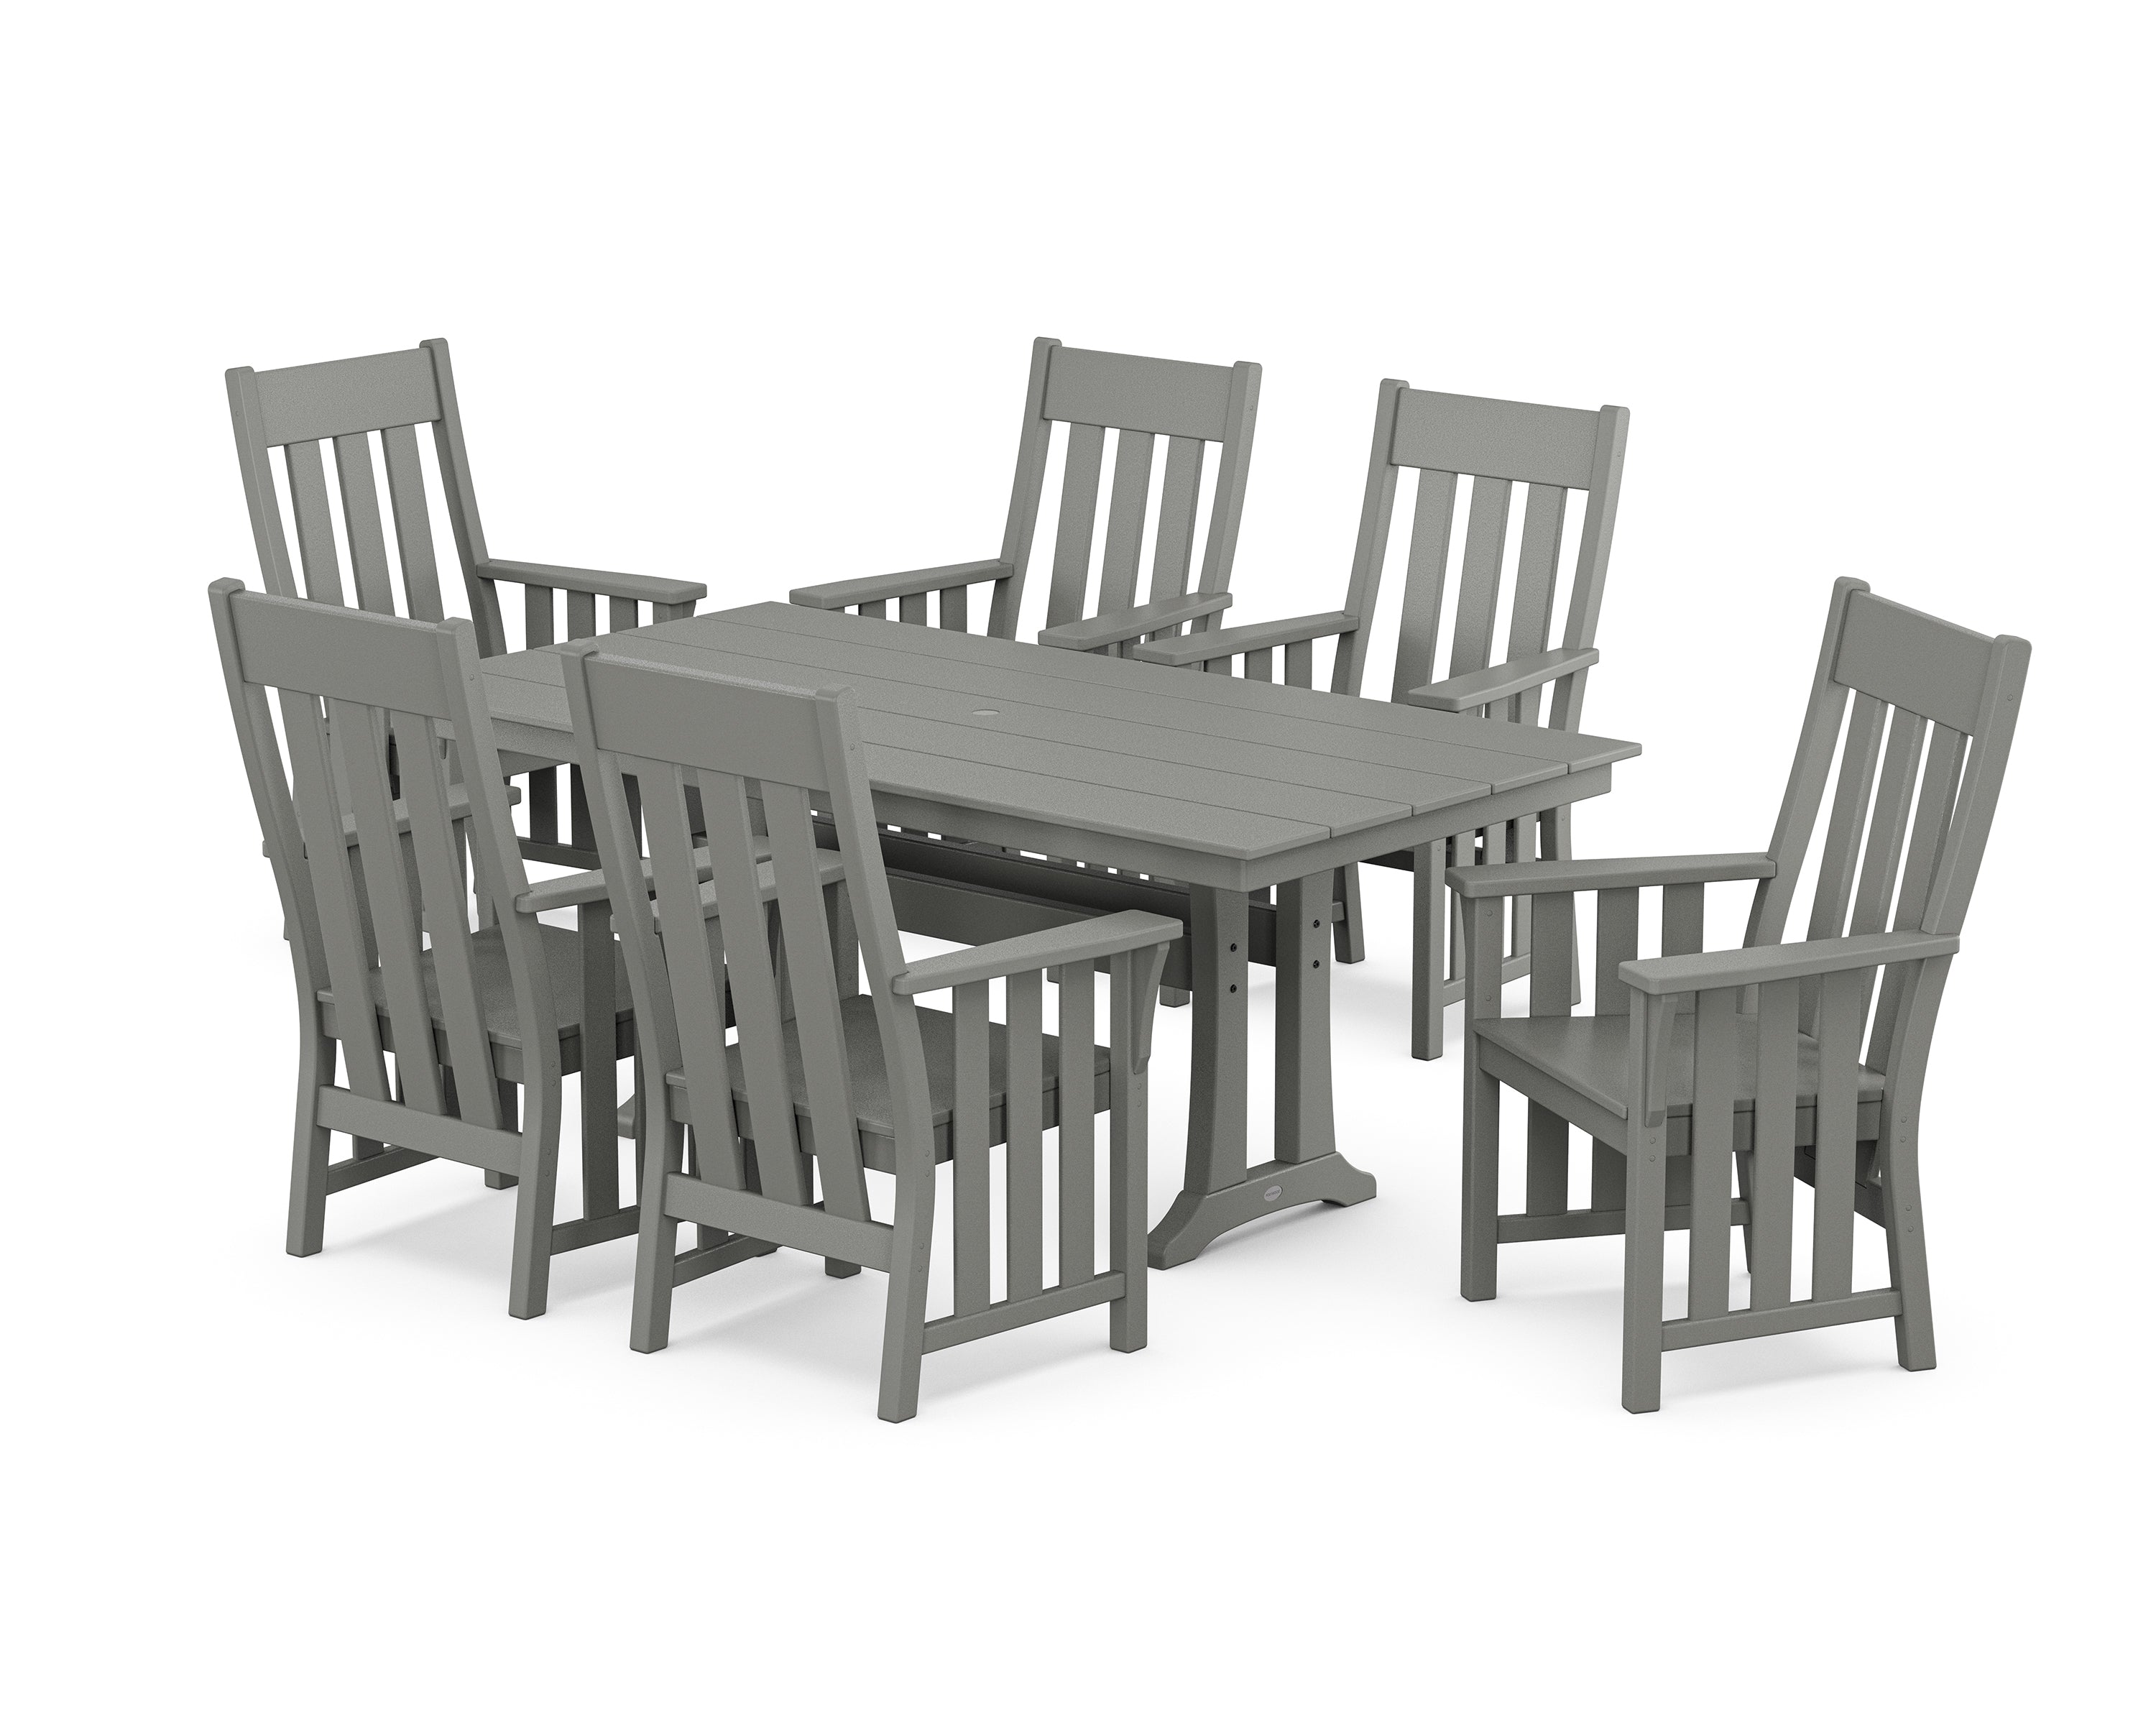 Martha Stewart by POLYWOOD® Acadia Arm Chair 7-Piece Farmhouse Dining Set with Trestle Legs in Slate Grey